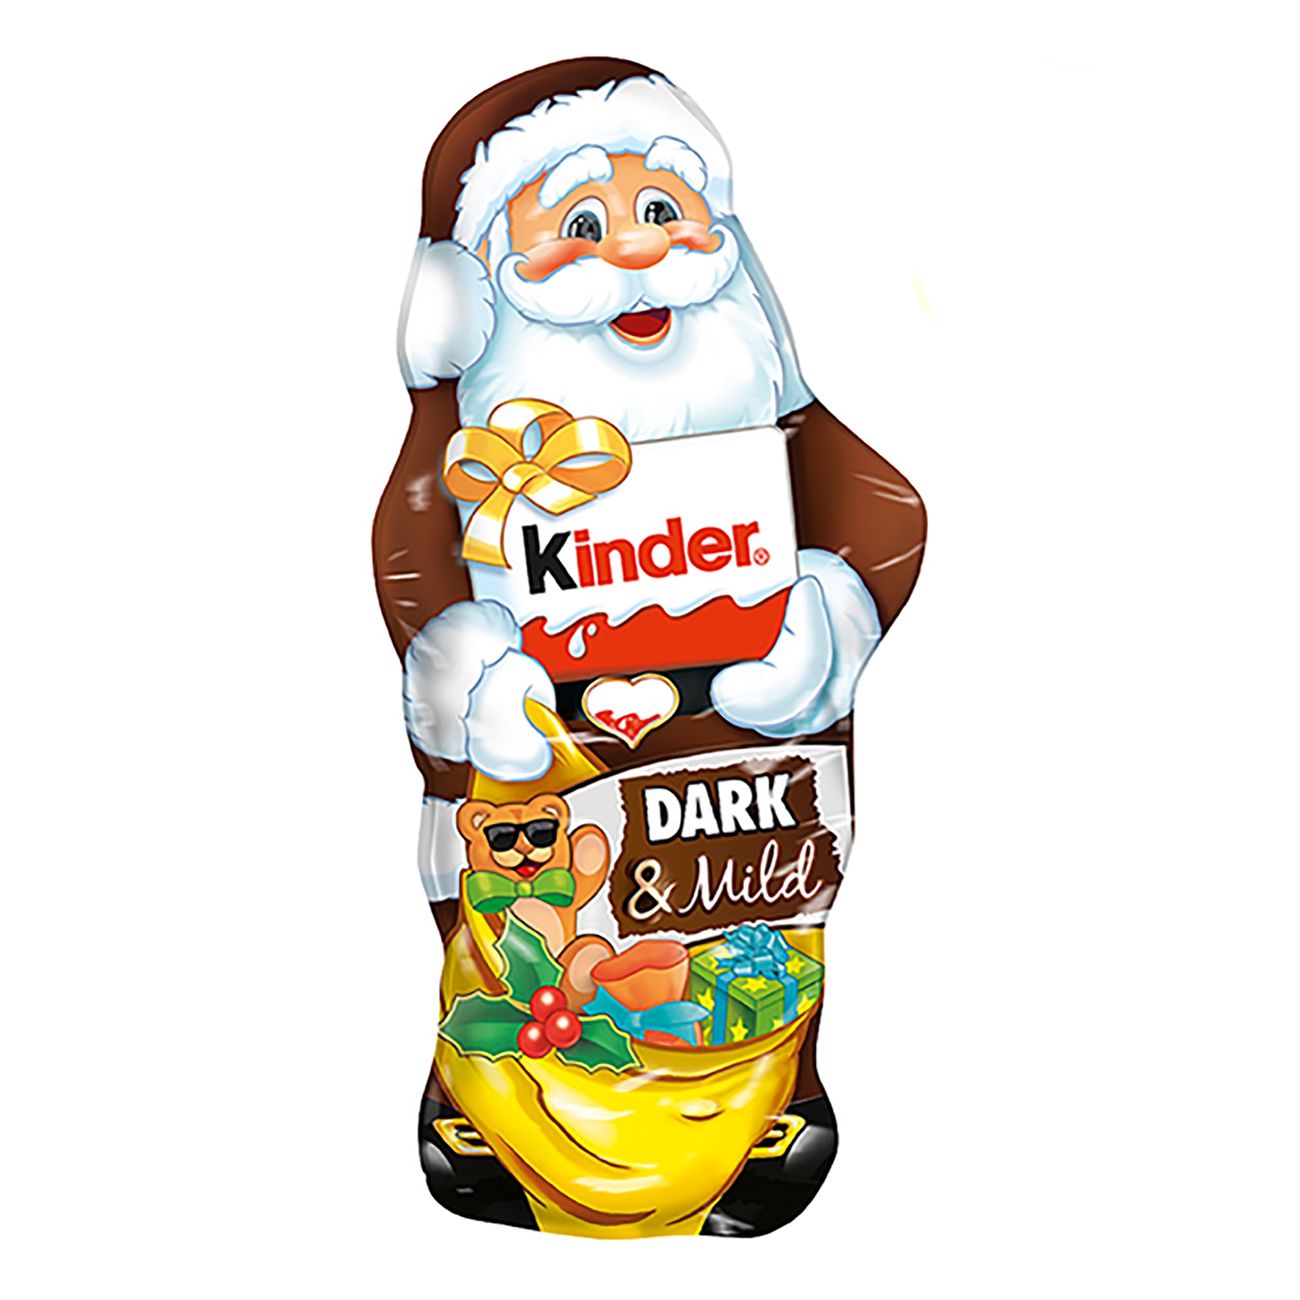 kinder-hollow-figure-santa-dark-mild-91530-1